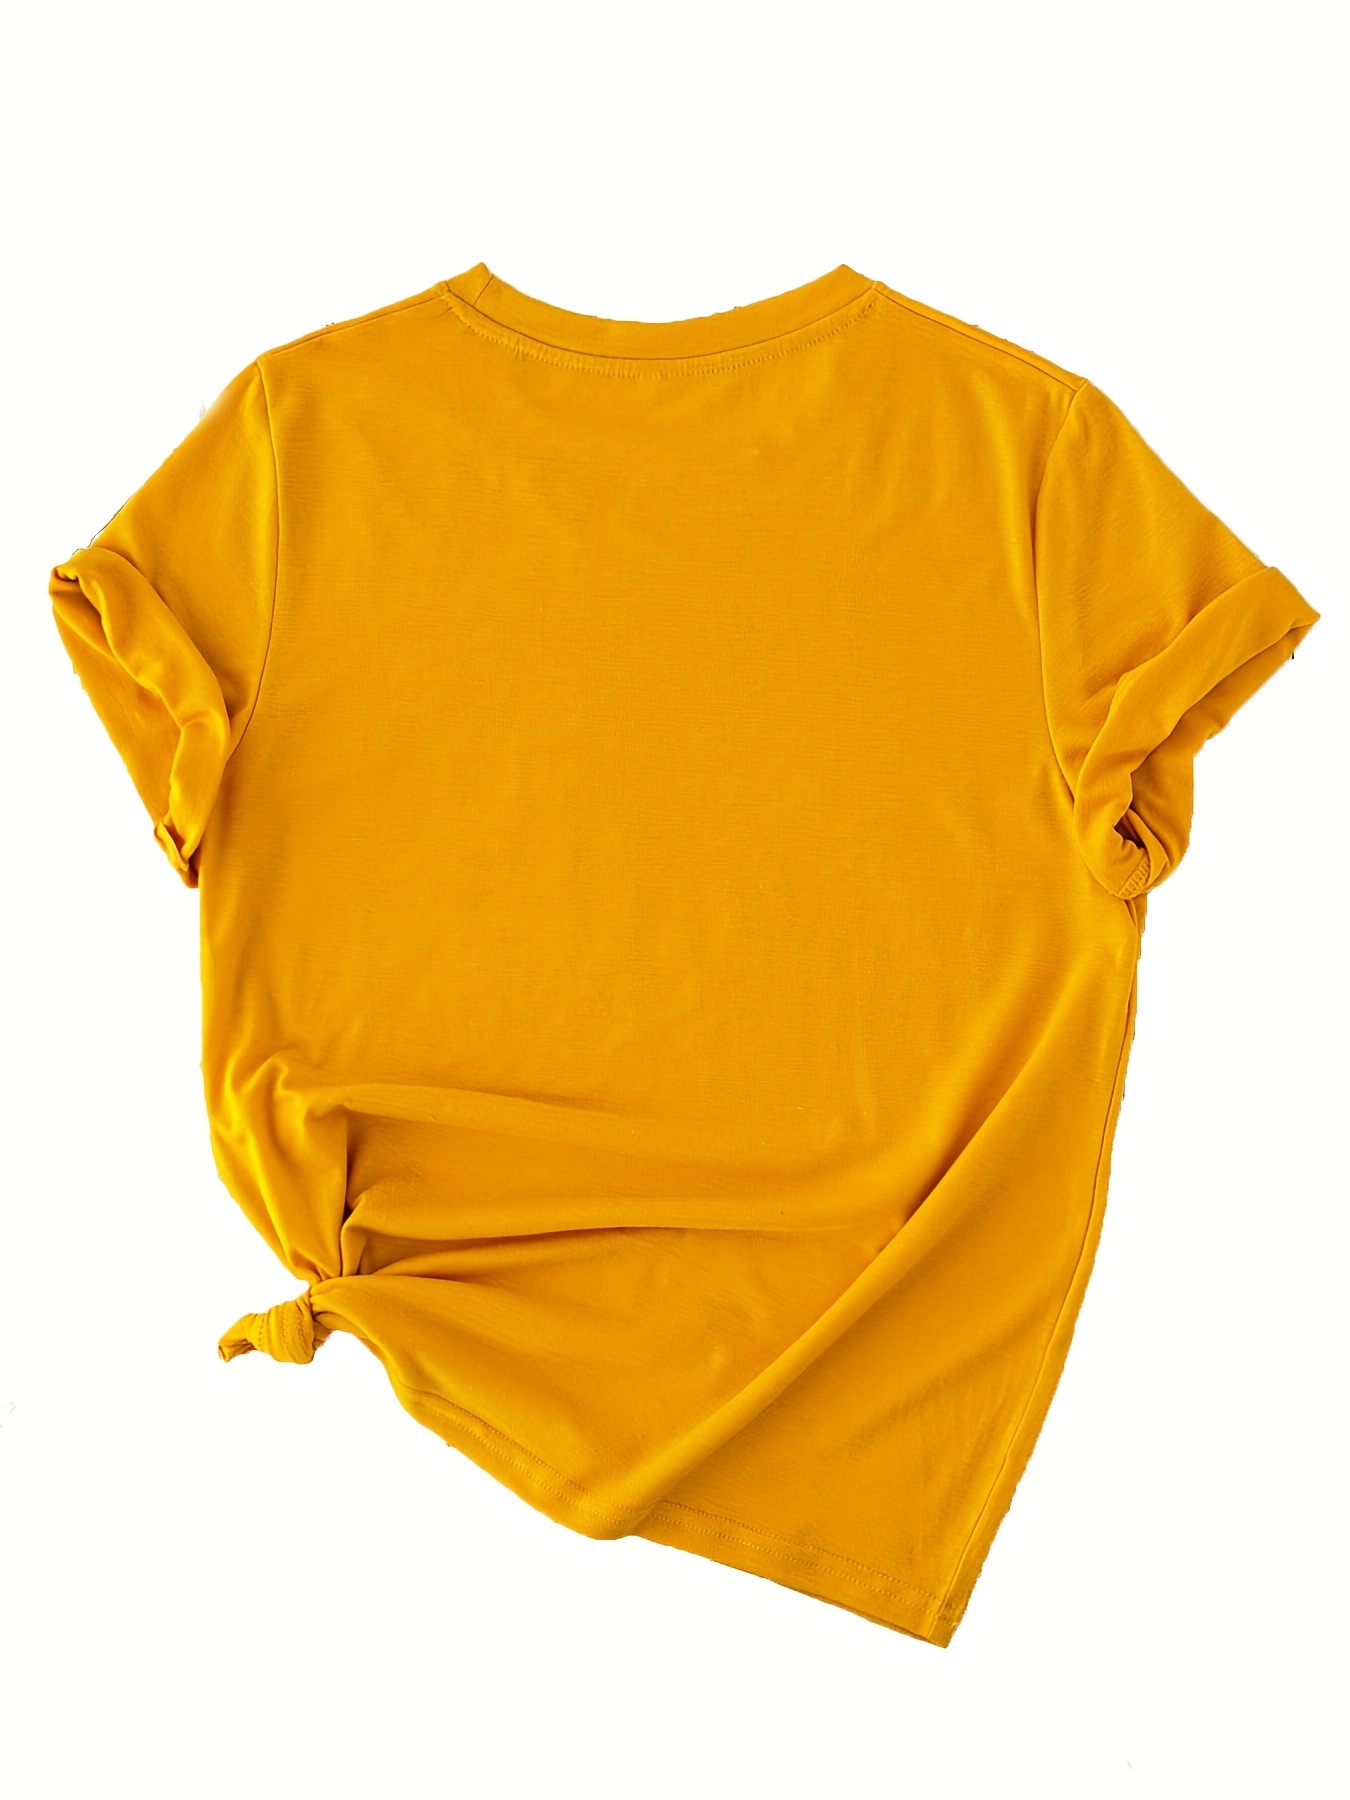 Scyoekwg Womens T Shirts Casual Short Sleeve Comfy Casual Tie Dye Printed  Short Sleeve Shirts Tops Fall Tops Loose Fitting Graphic Tee Trendy  Crewneck Fall Shirt Tops Yellow M 